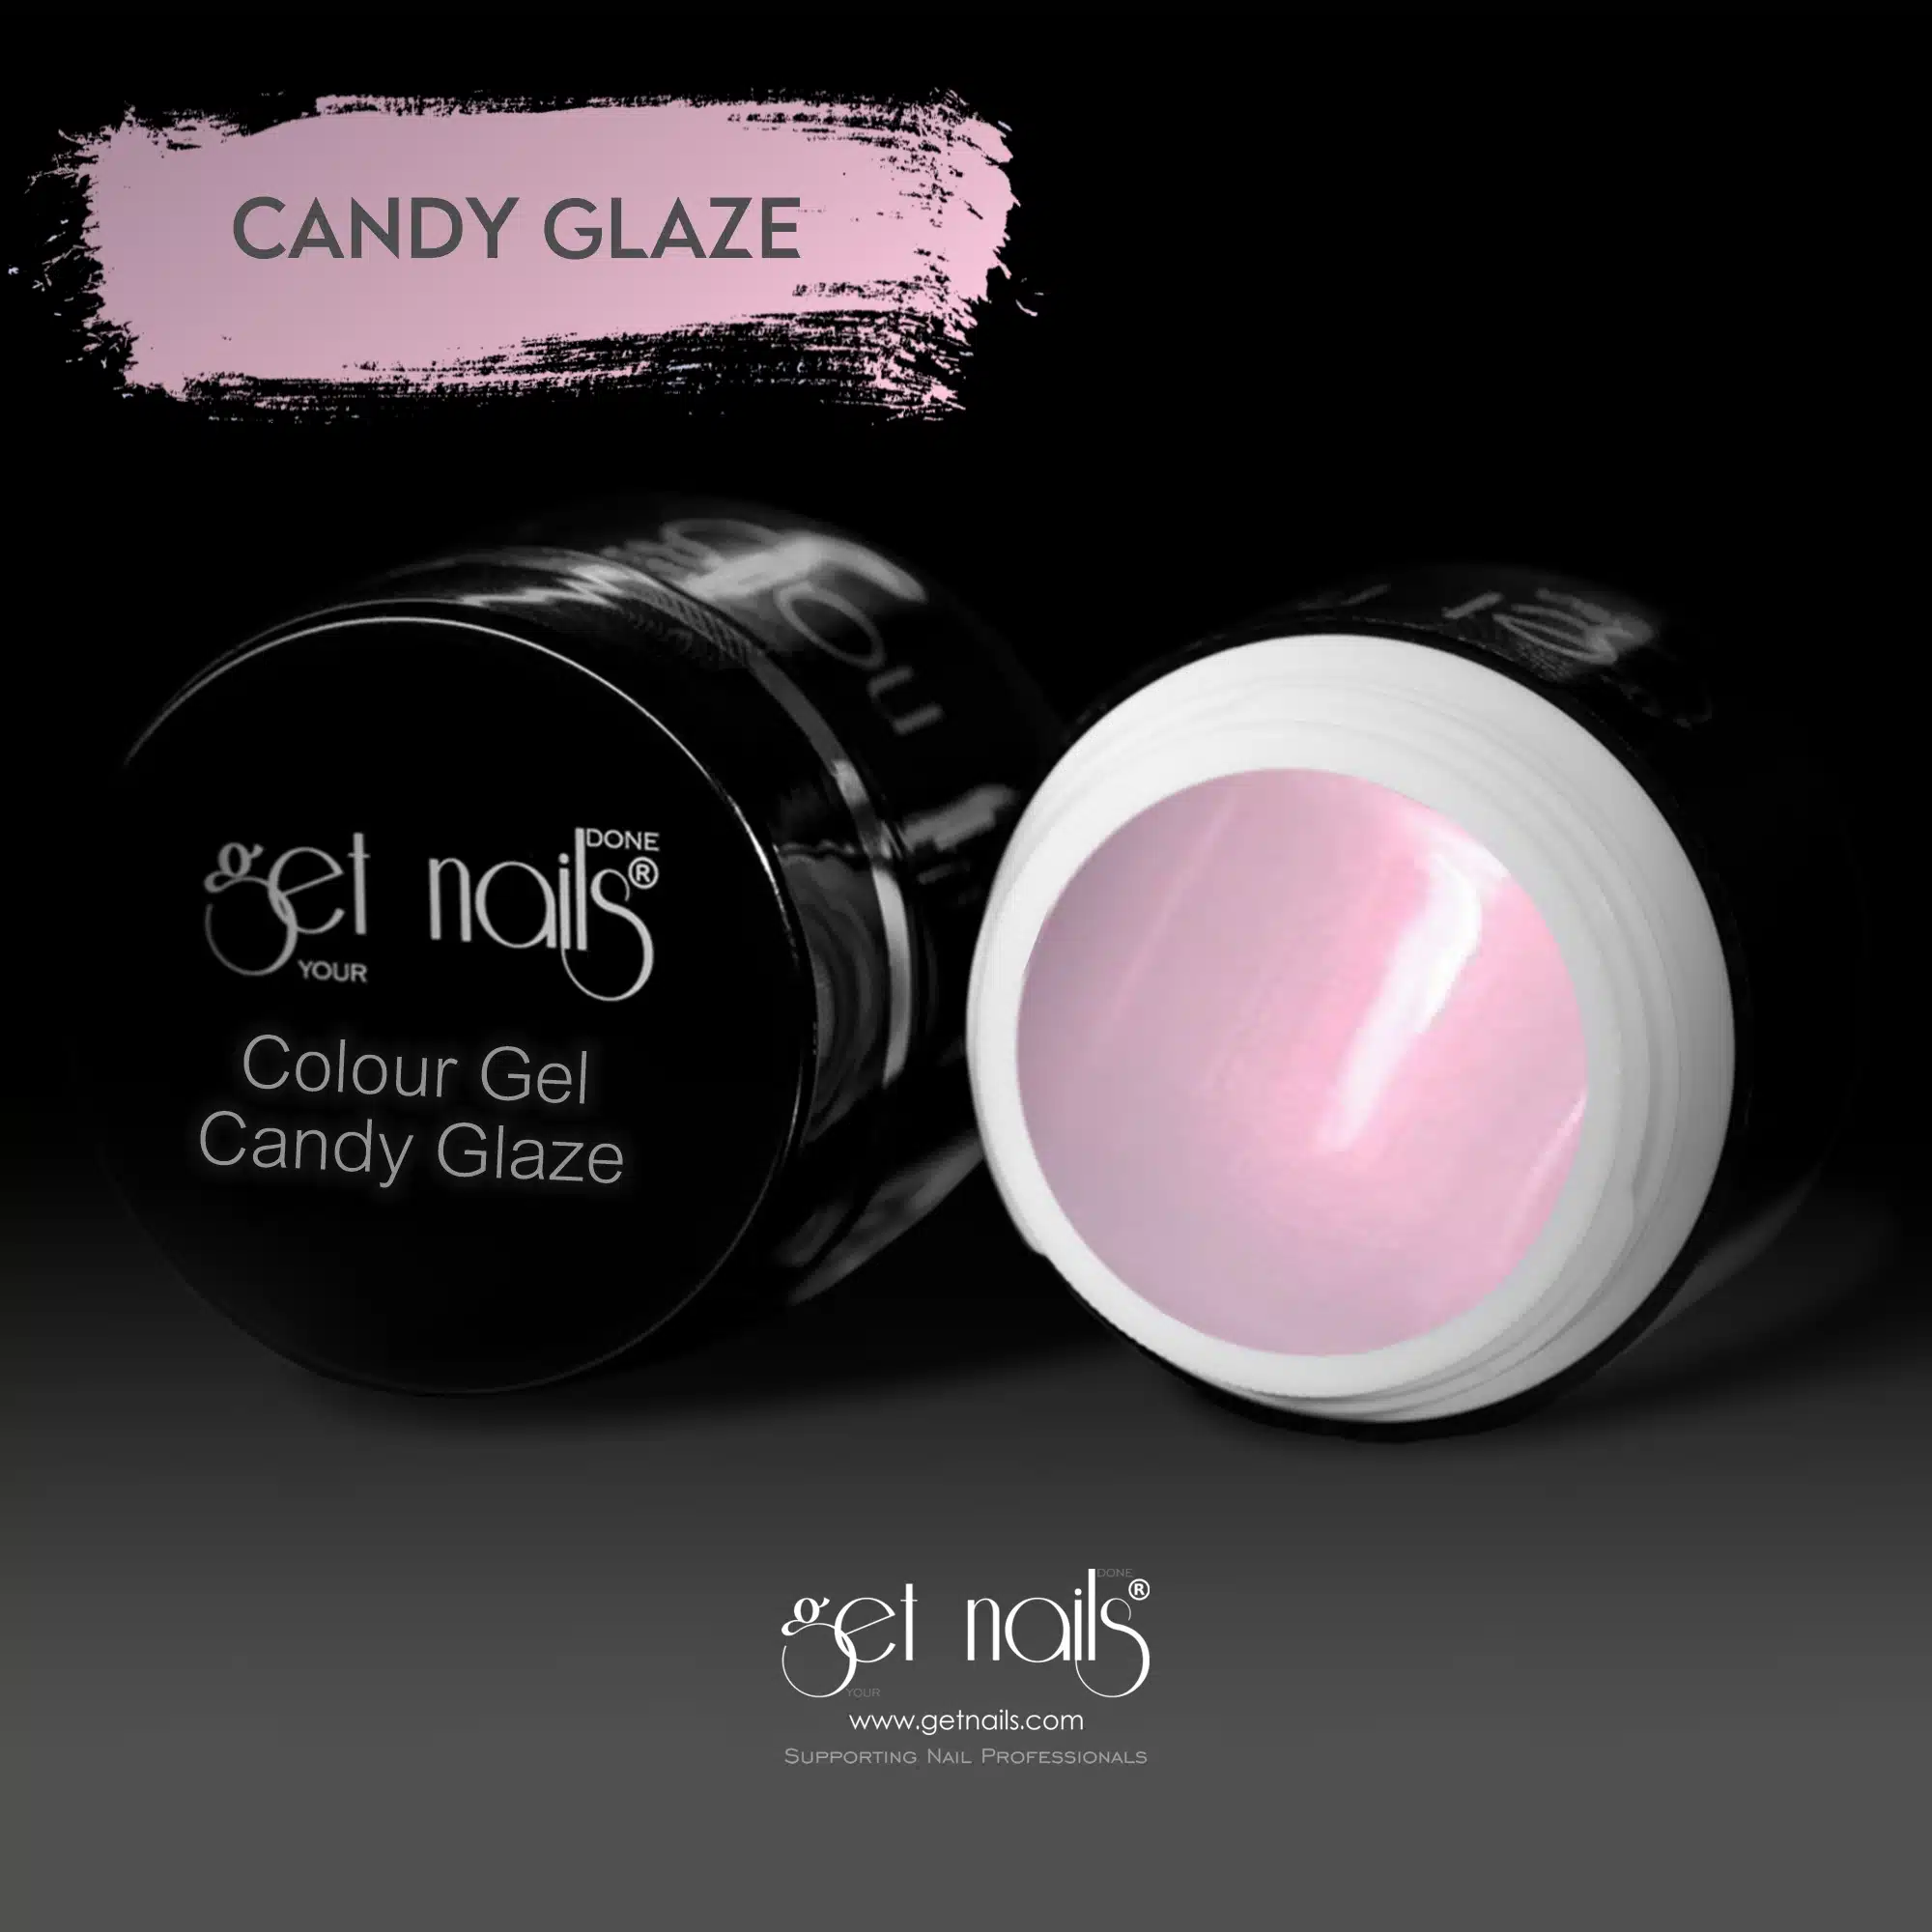 Get Nails Austria - Colour Gel Candy Glaze 5g